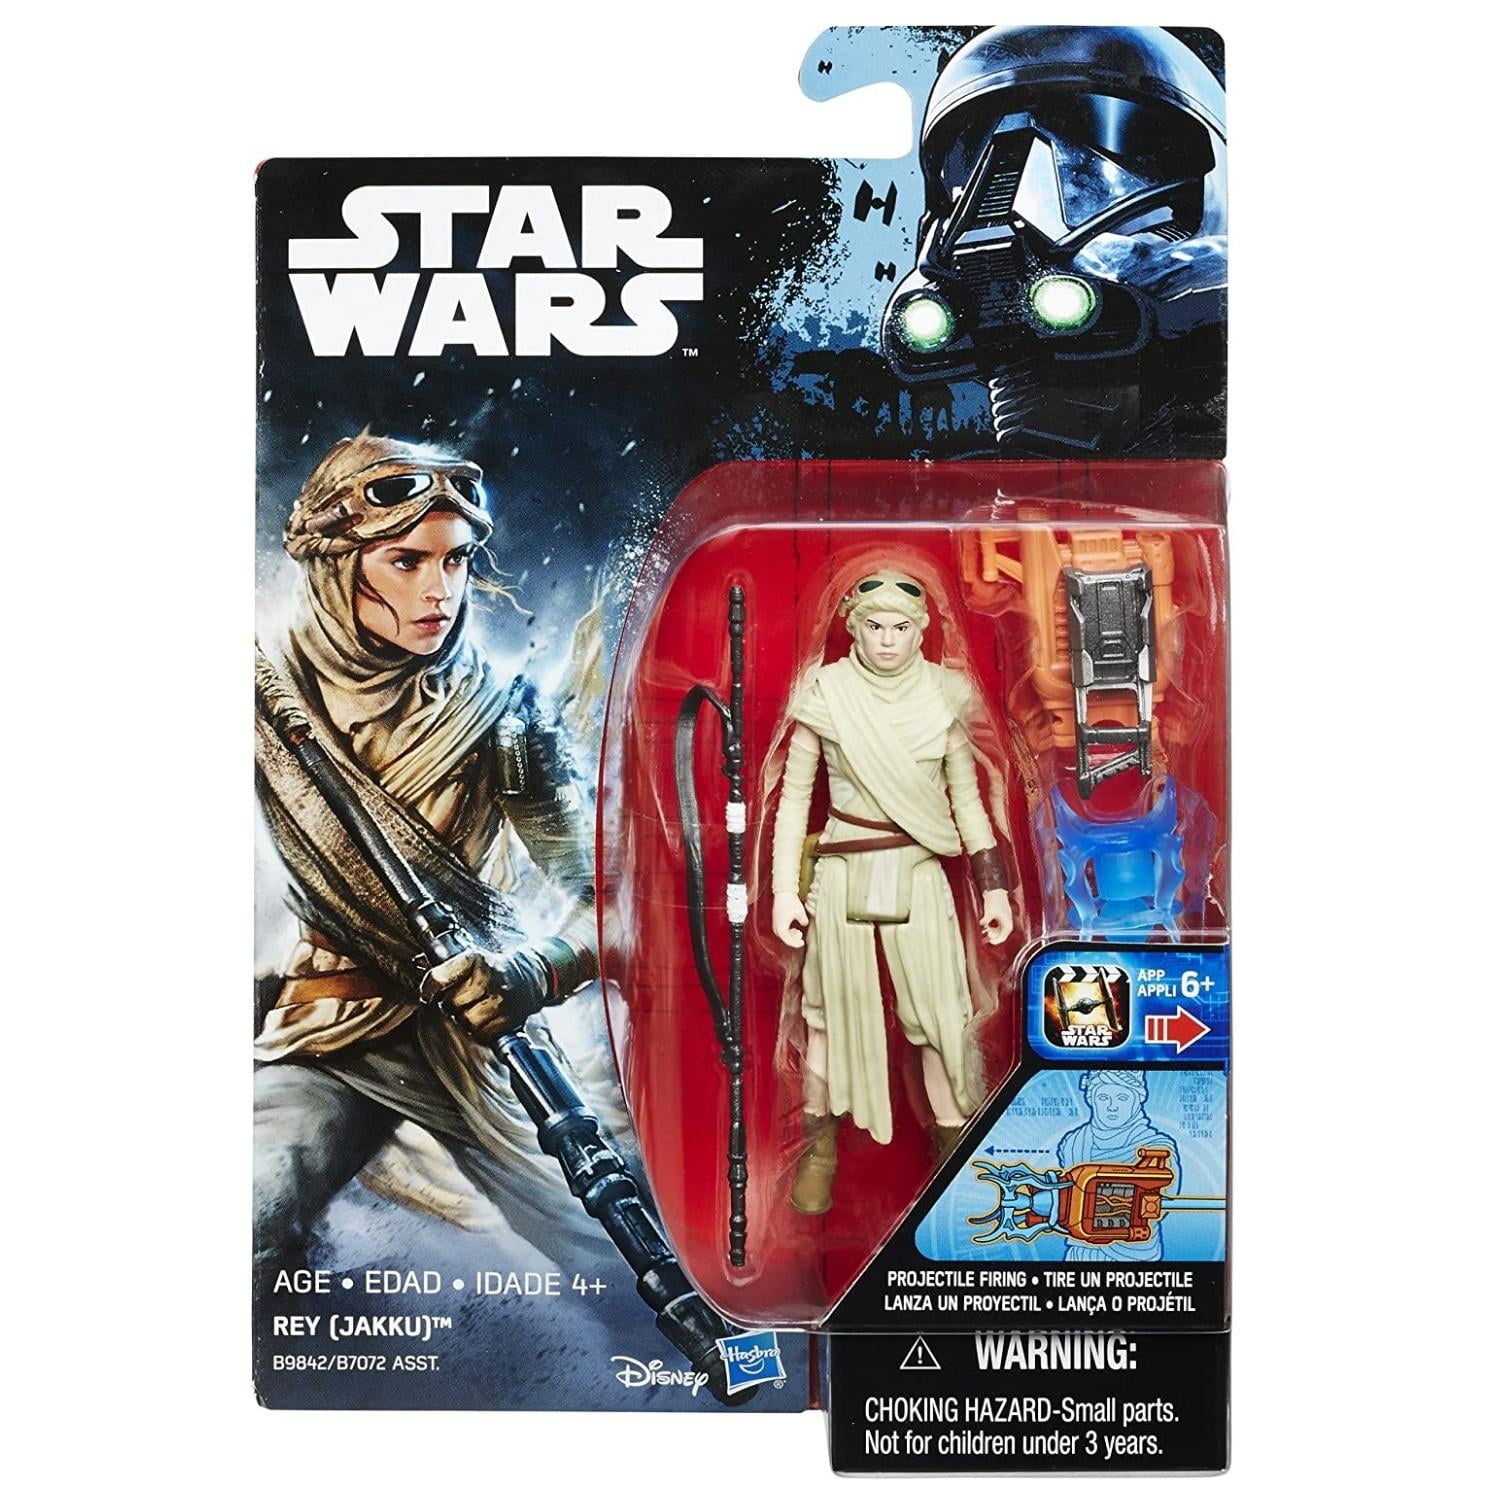 Star Wars pack de 4 figurines Hasbro : King Jouet, Figurines Hasbro - Jeux  d'imitation & Mondes imaginaires